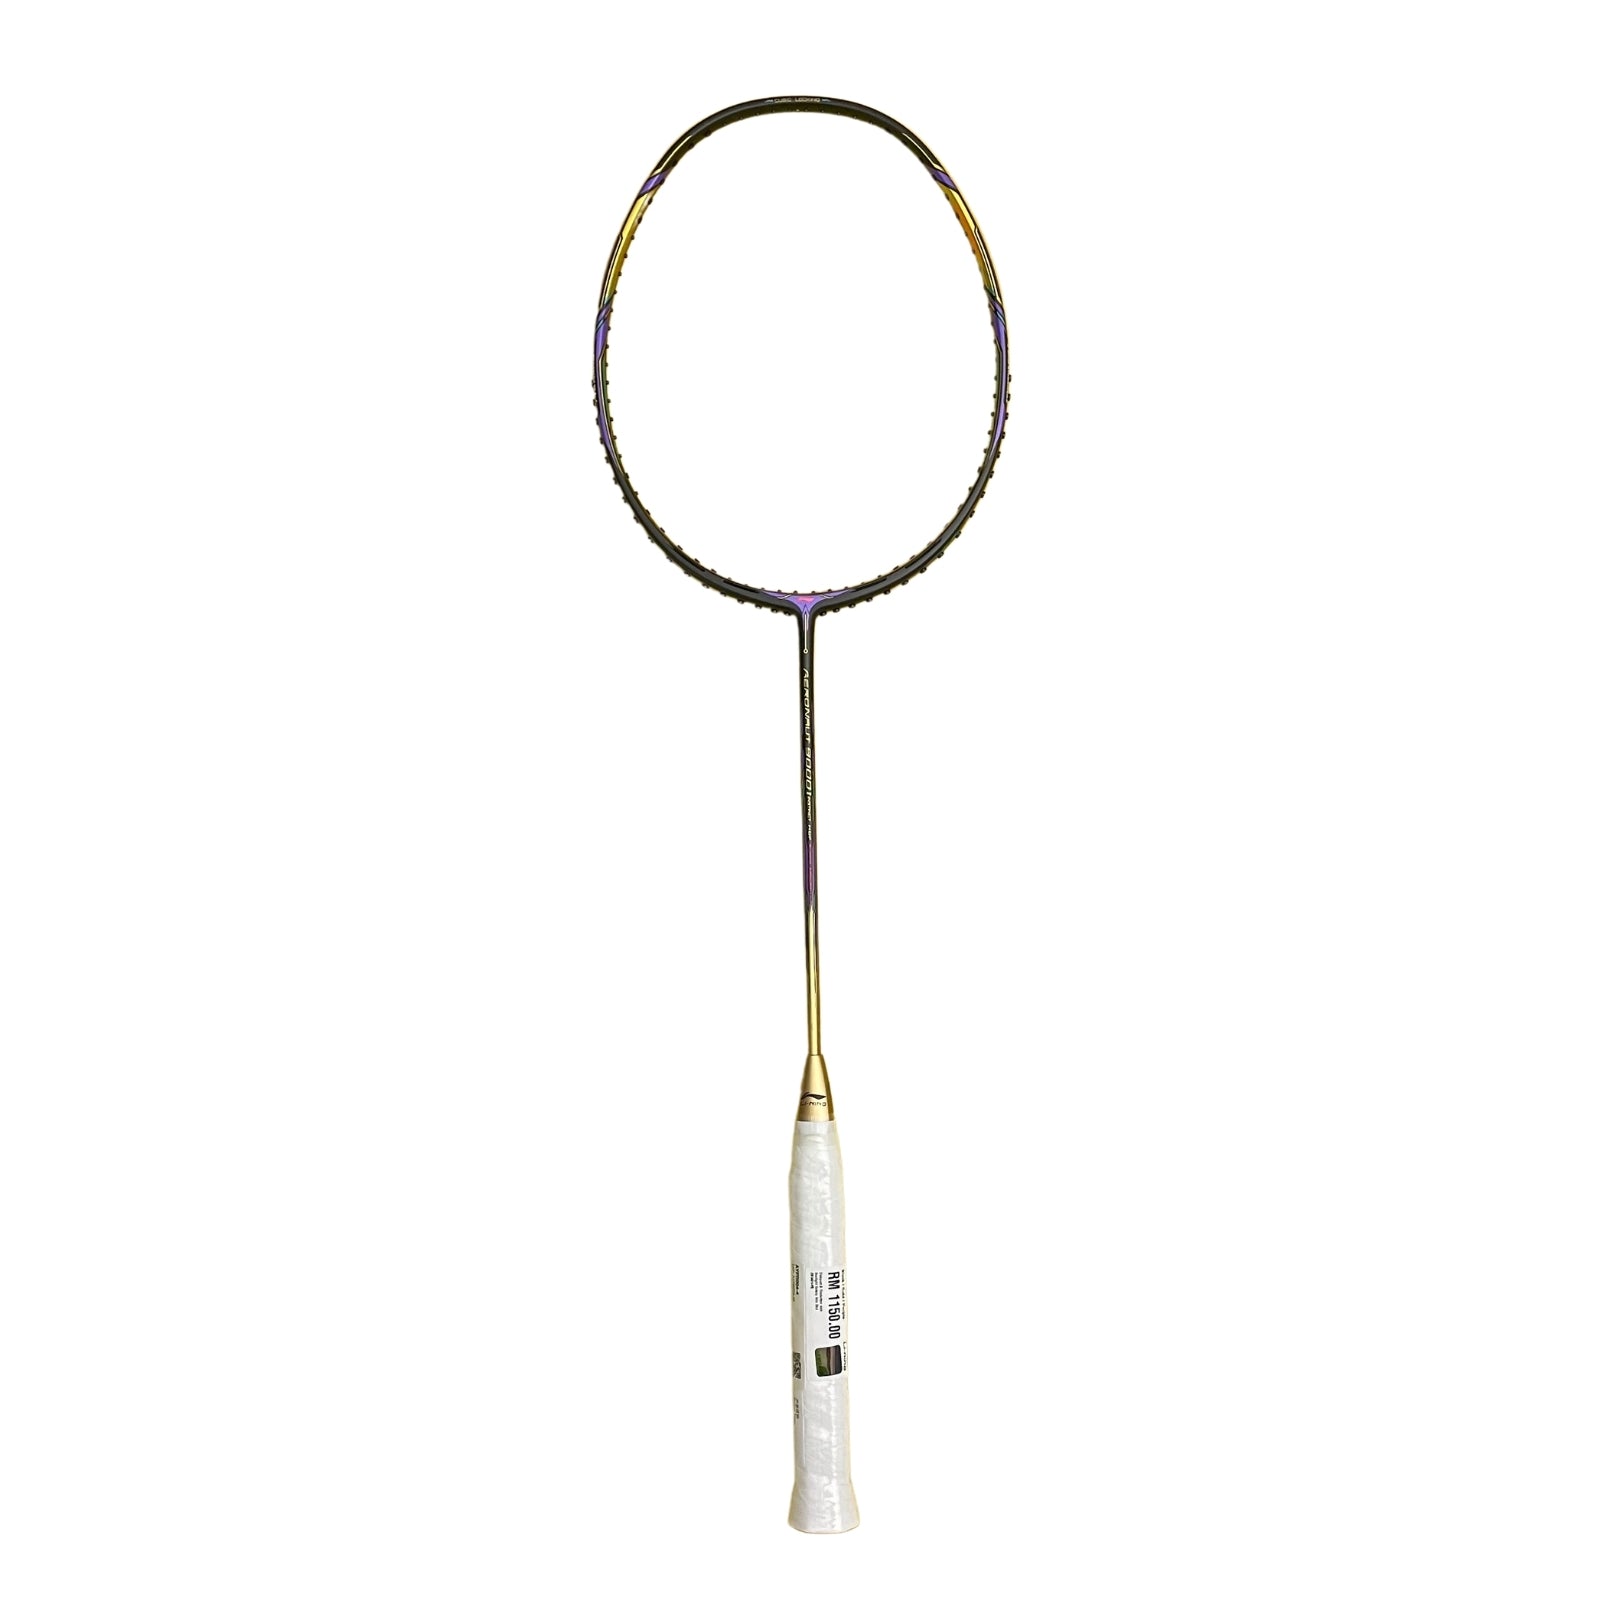 Li-Ning Aeronaut 9000i Speed Control Badminton Racquet 5U(79g)G6